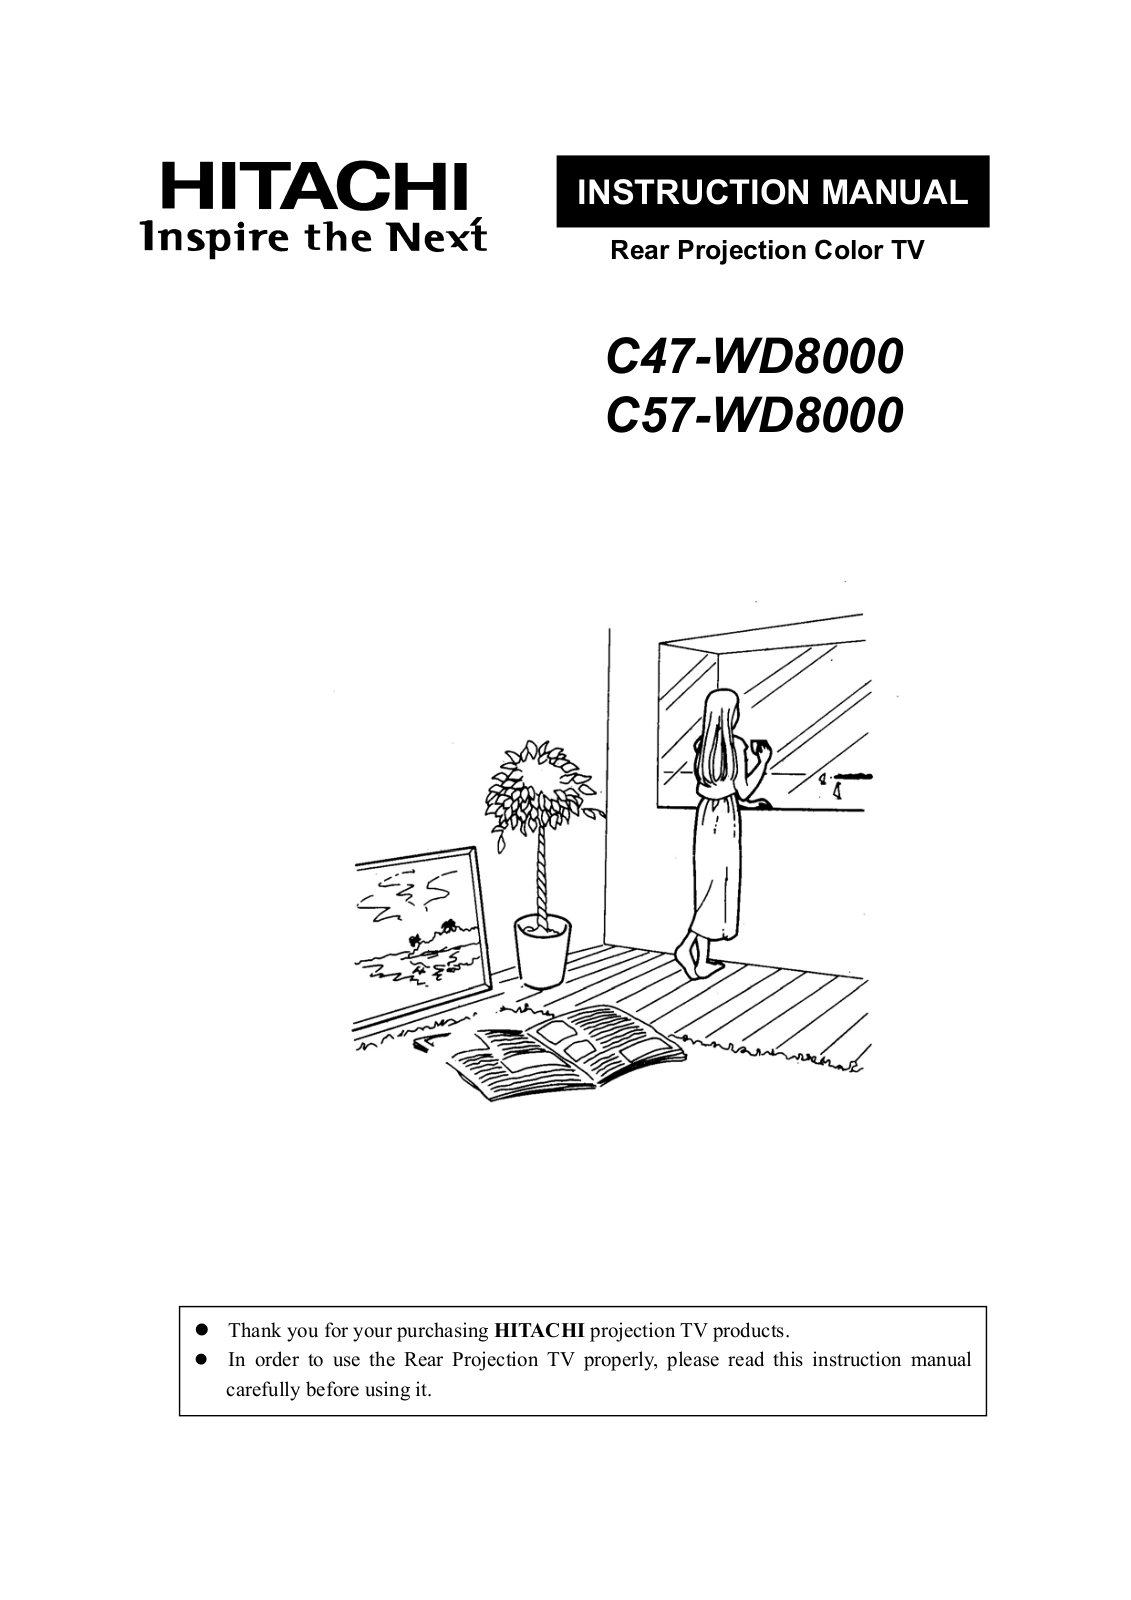 Hitachi C57-WD8000, C47-WD8000 User Manual